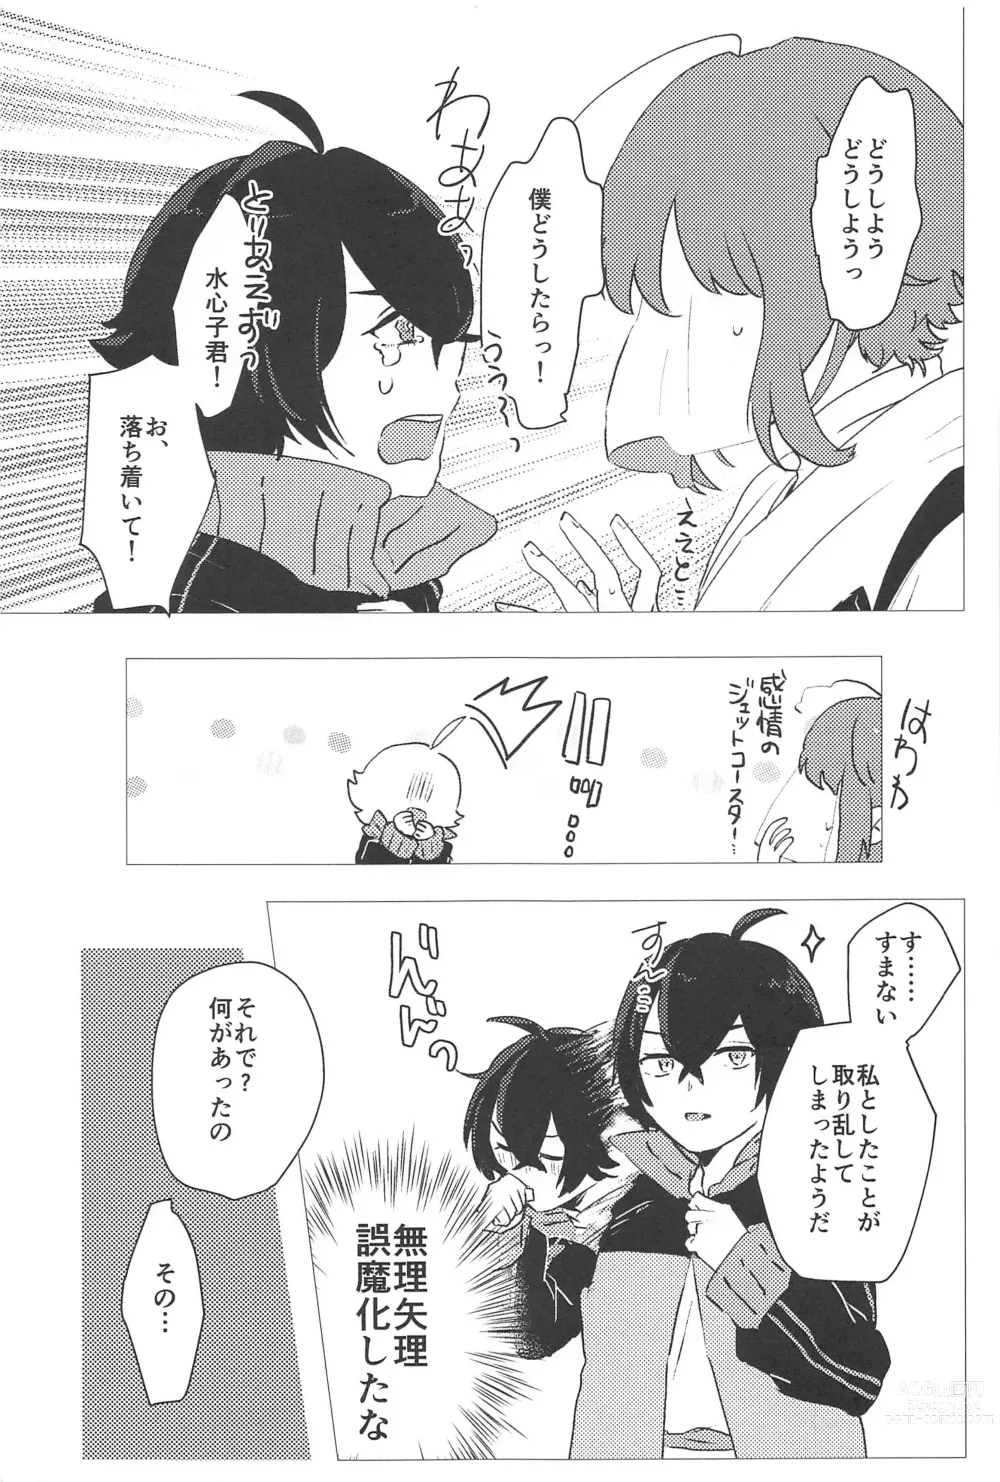 Page 6 of doujinshi Konnanotte Nai!